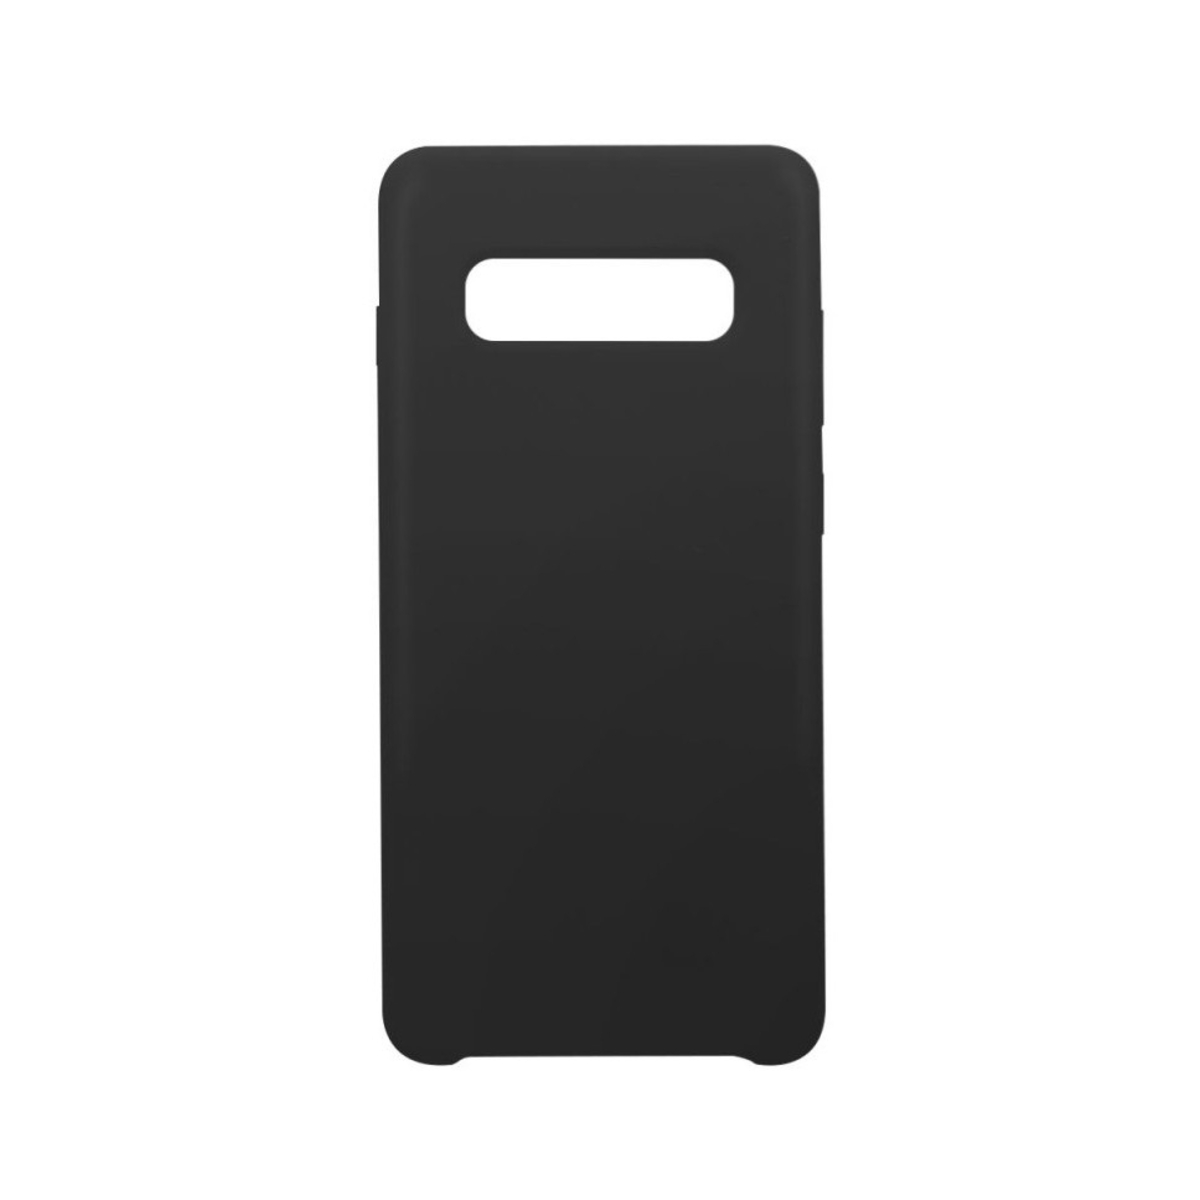 Чехол-накладка Devia Nature Series Silicon Case для смартфона Samsung Galaxy S10, черный